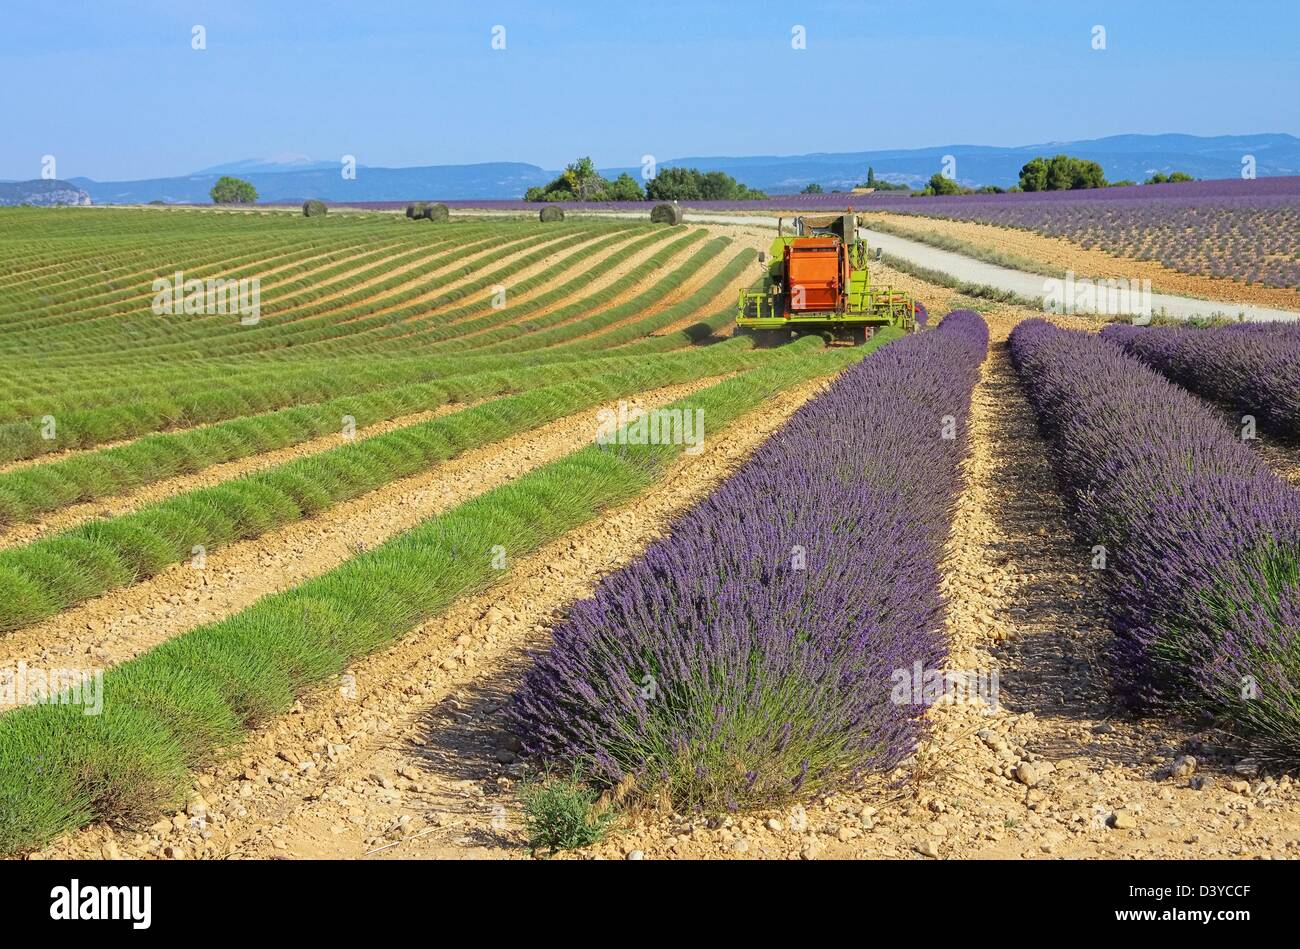 Lavendelfeld Ernte - lavender field harvest 13 Stock Photo